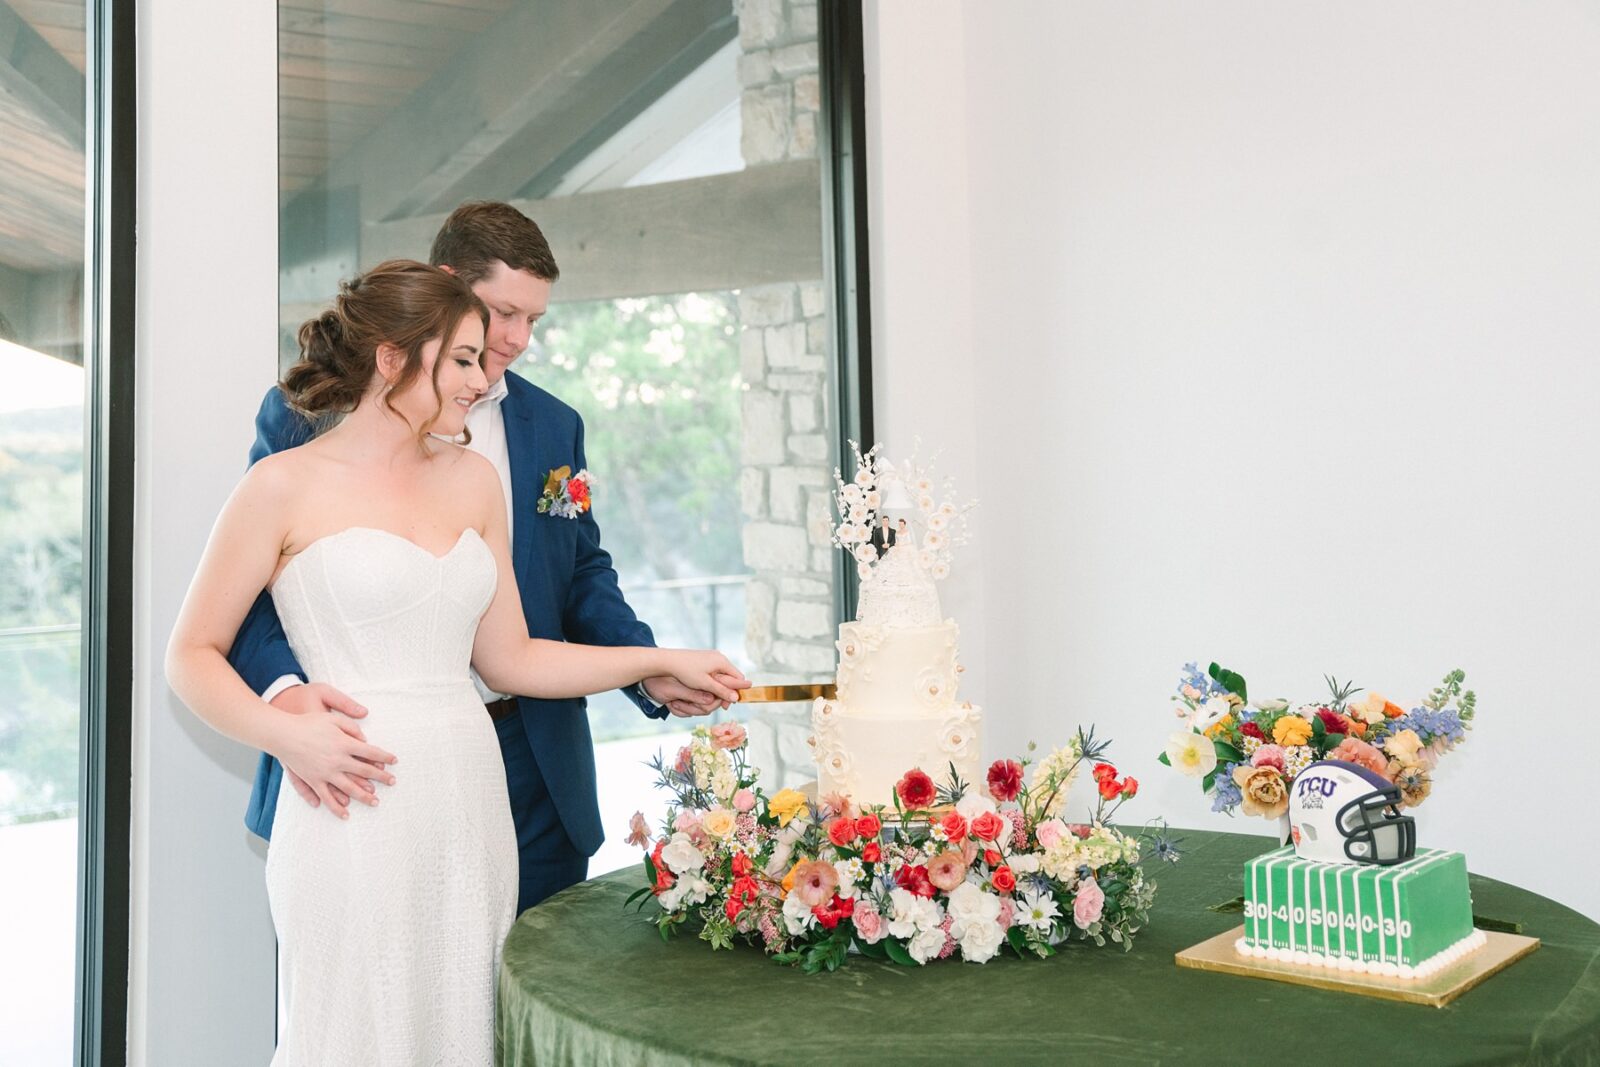 2tarts bakery, bride and groom cutting wedding cake, TCU grooms cake, TCU wedding cake, football groom cake, 2tarts wedding cake, the videre